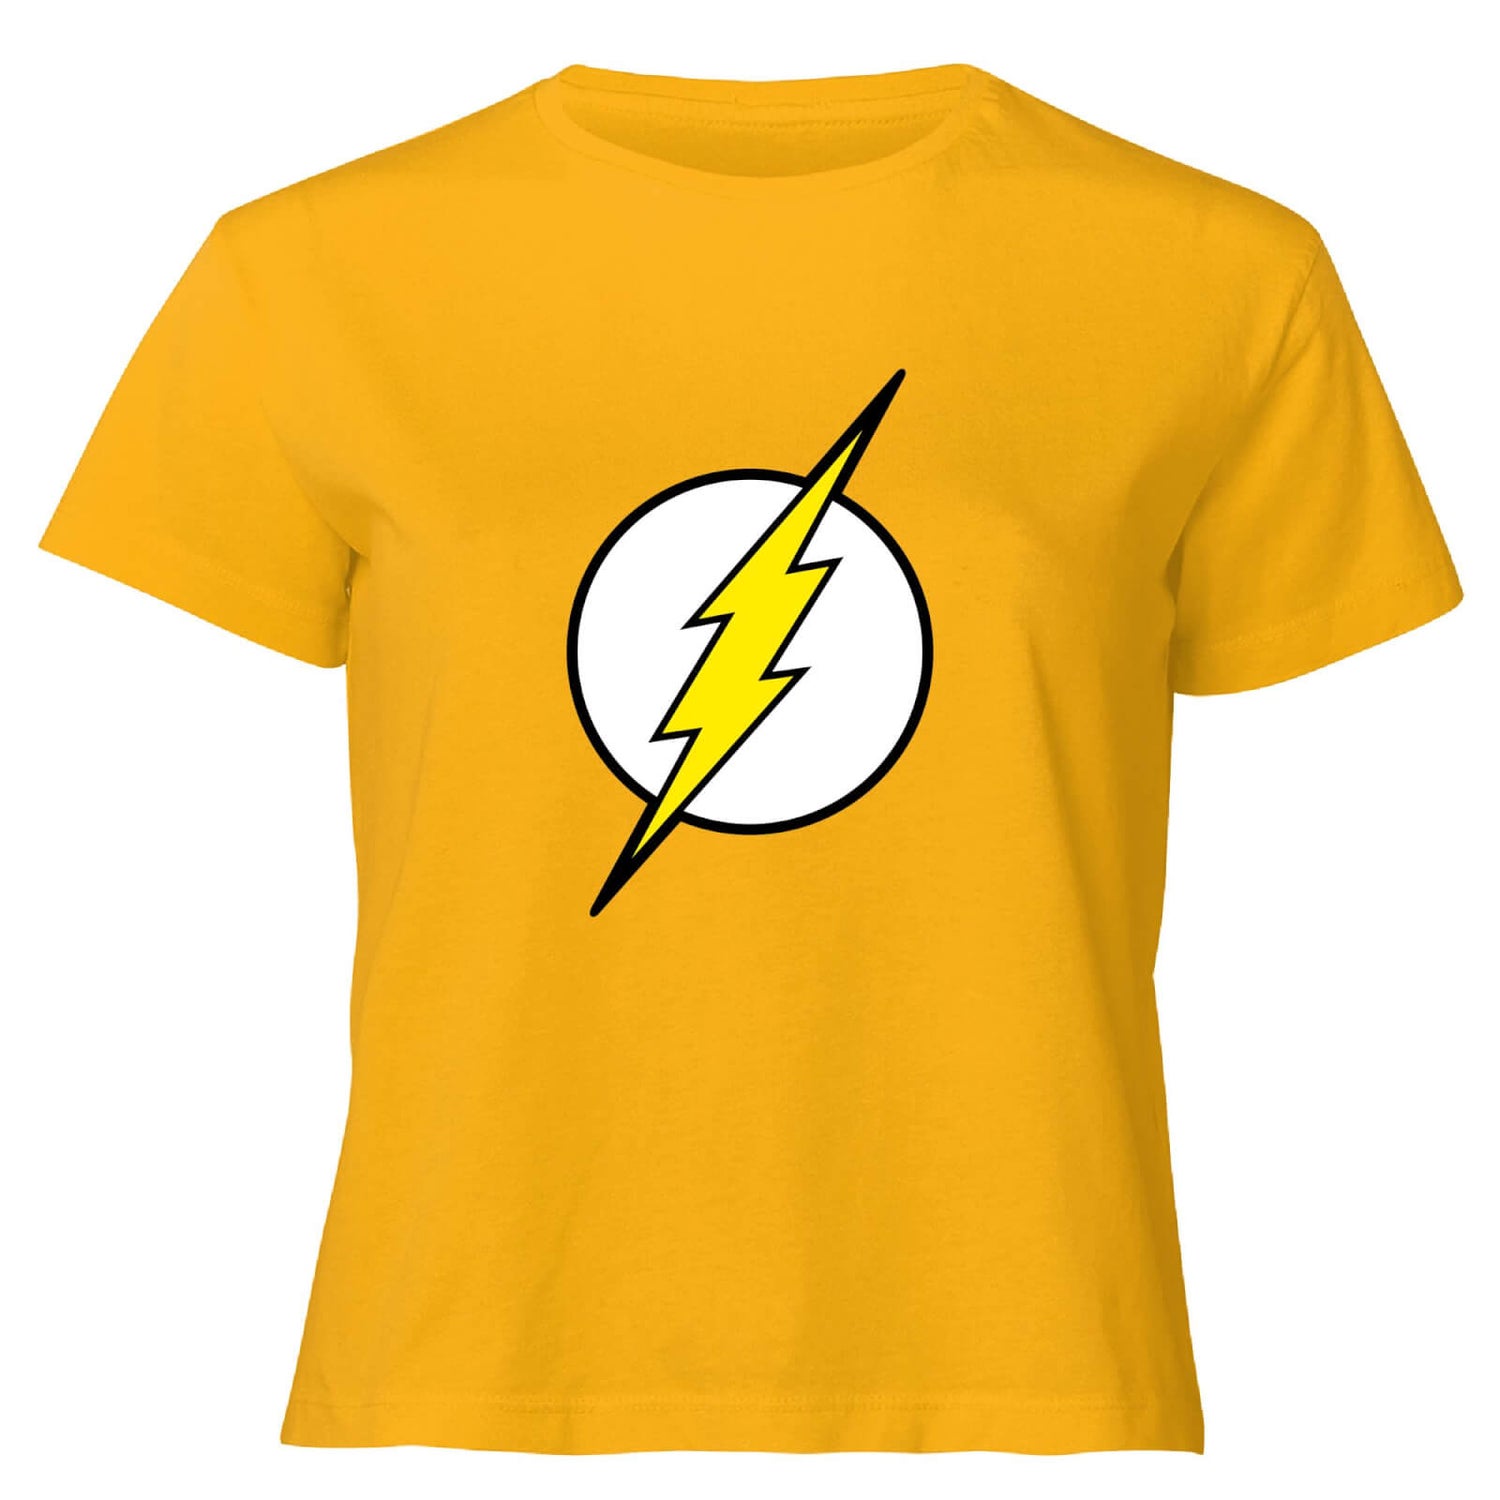 Justice League Flash Logo Women's Cropped T-Shirt - Mustard